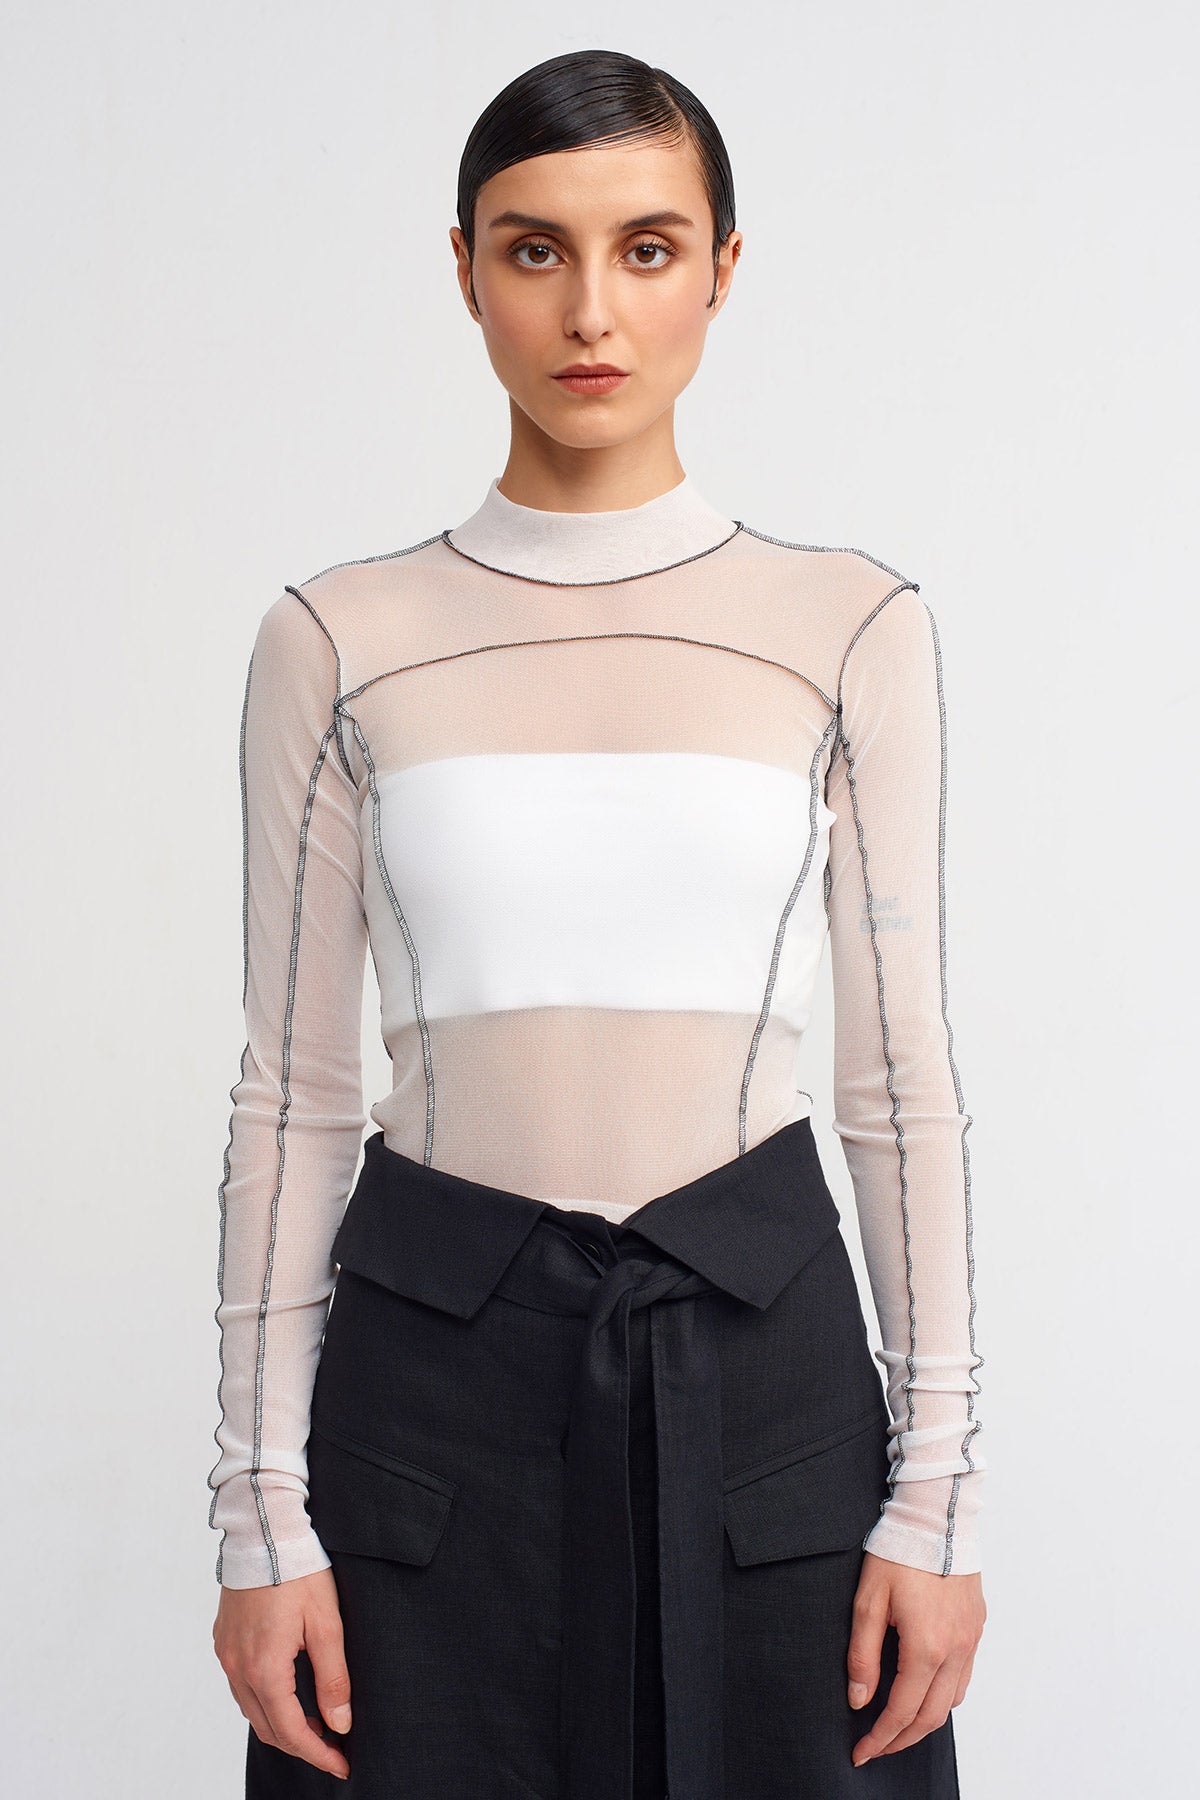 White / Black Contrast Stitched Mesh Bodysuit-Y241011010